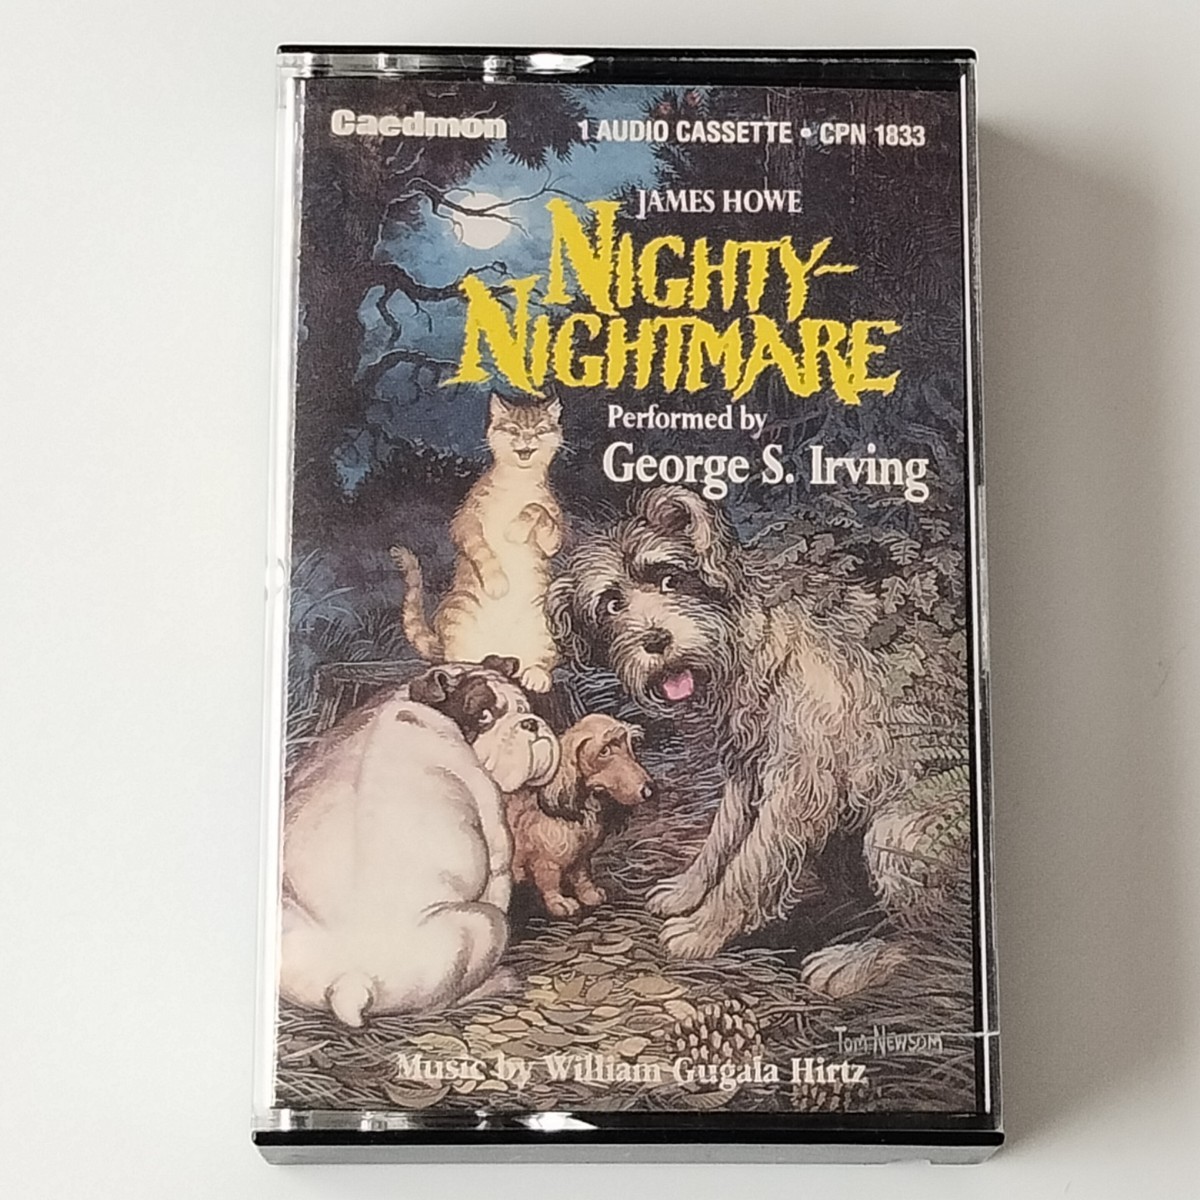 [ cassette tape ] James * is uJAMES HOWE/NIGHTY-NIGHTMARE(CPN-1833)CAEDMON/GEORGE S.IRVING George S.a- vi ng